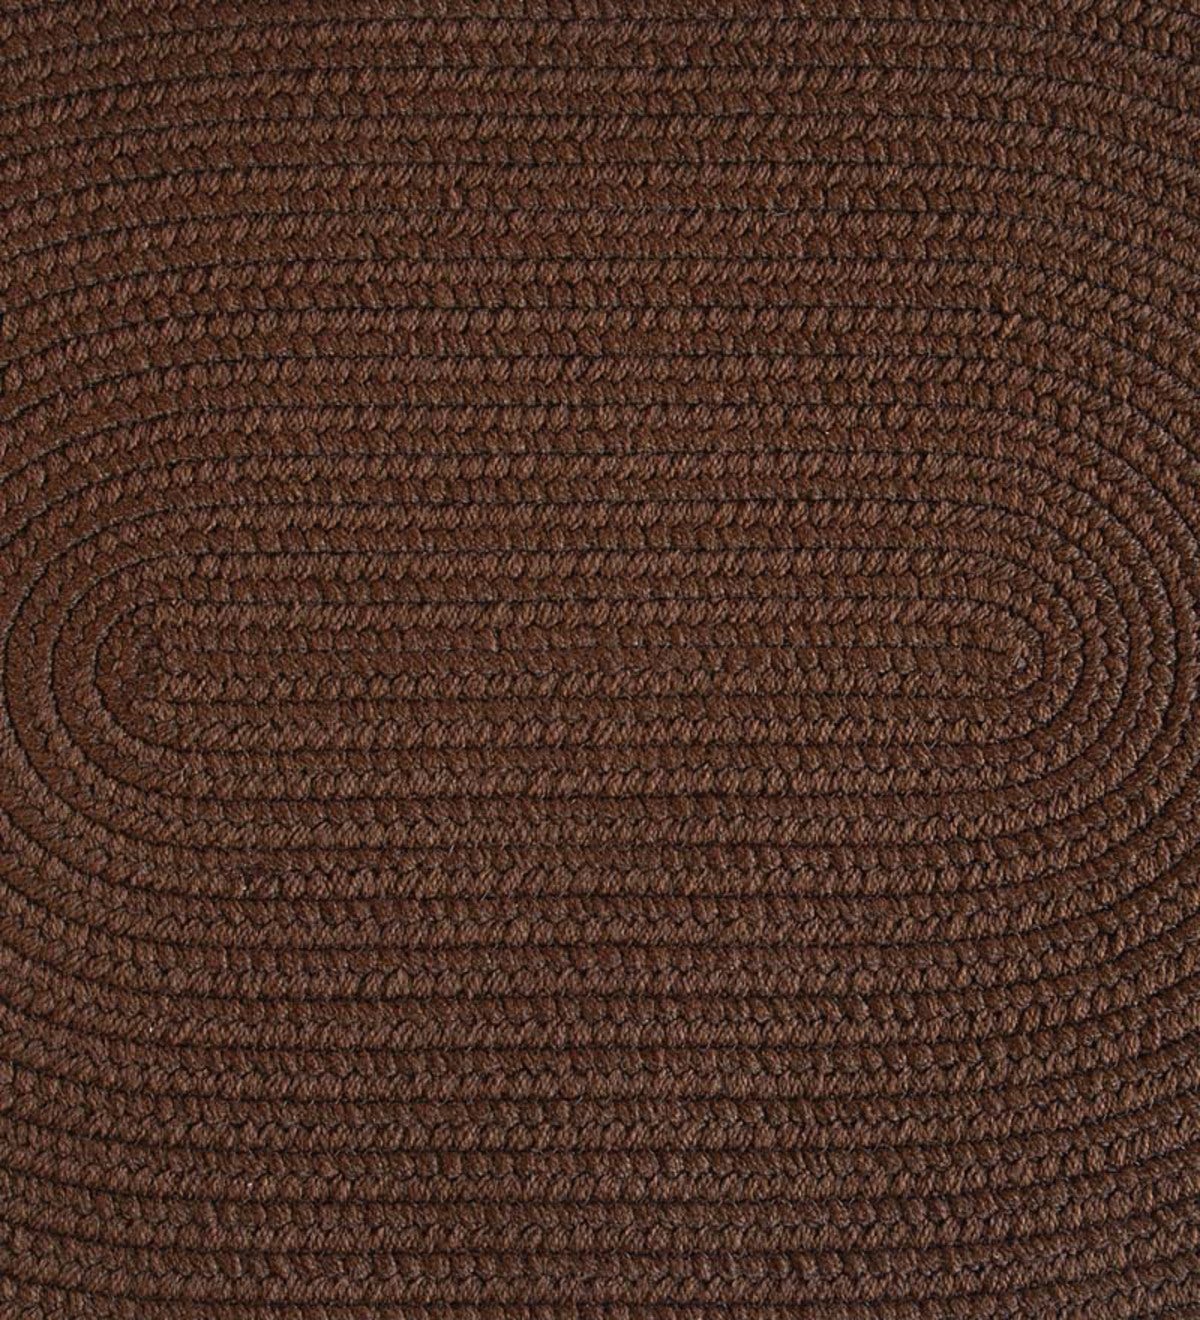 4'W x 6'L Braided Rug - Brown Solid